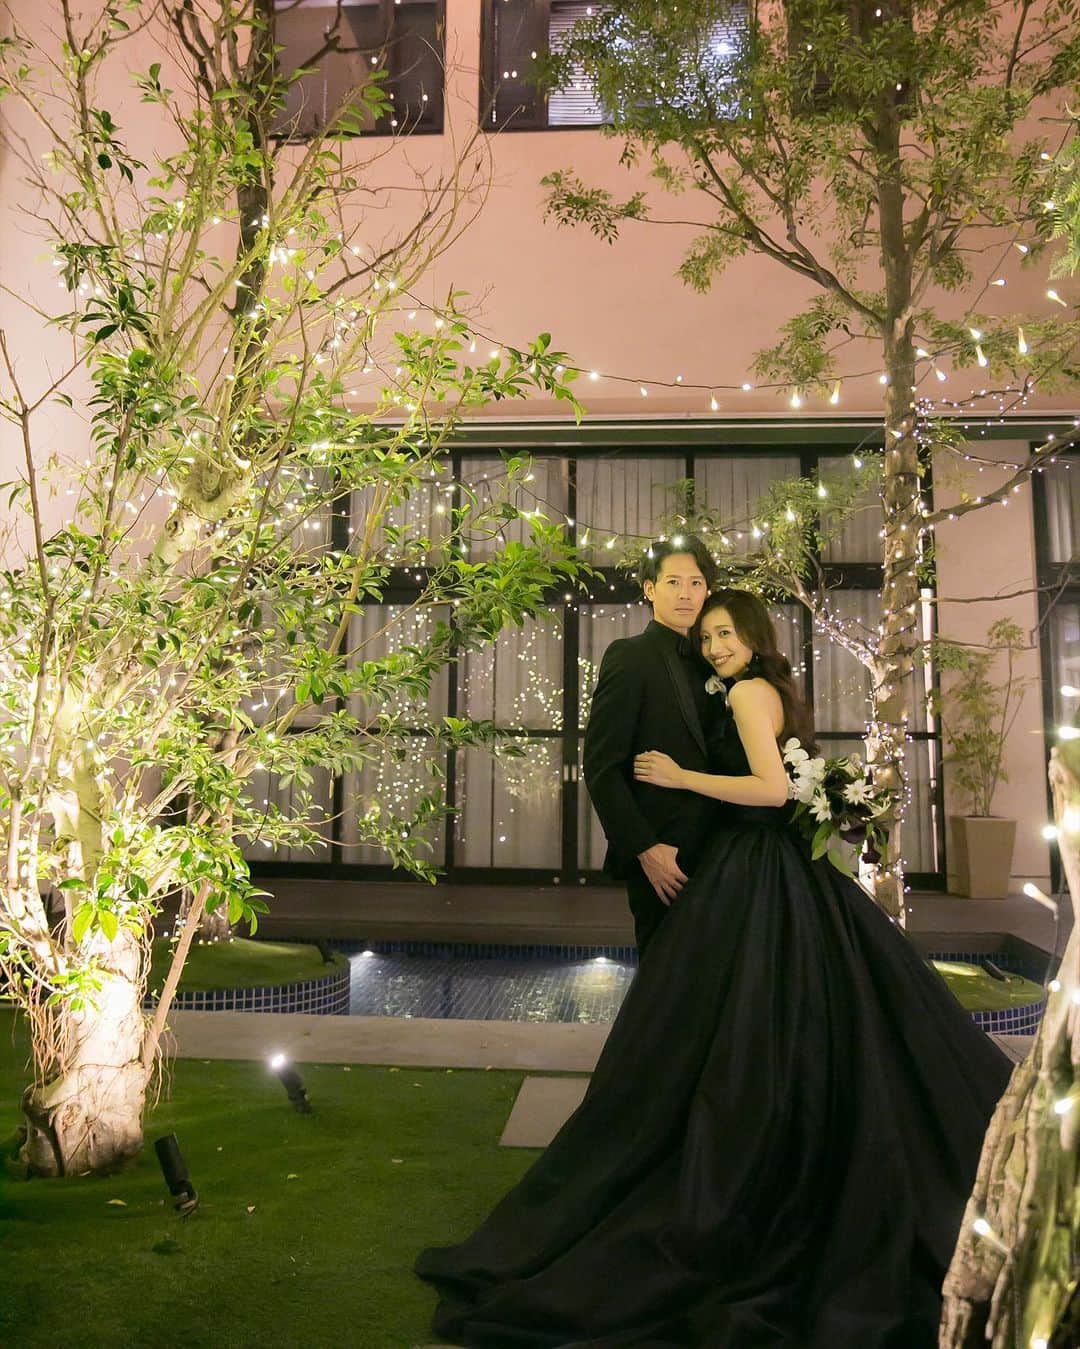 LAZOR_GARDEN_NAGOYAのインスタグラム：「. こちらのお写真は. @choep.m さんから リグラムさせていただきました 素敵なお写真ありがとうございます*  ブラックで統一されたおふたりの装い👗  ライトアップされたガーデンに おふたりのドレス姿がよく映え ロマンチックな雰囲気に..✨  ------------------ . 『#ラソールガーデン名古屋』で検索！ @lazor_garden_nagoya のフォロー お待ちしております＊ . #スタイルズ花嫁 #ラソール花嫁 #ブライダルハウスtutu #ラソ組 #marryxoxo #DRESSY花嫁 #披露宴レポ #名古屋駅 #名駅 #名古屋 #結婚式当日レポ #挙式レポ #名古屋花嫁 #ブーケ #結婚式会場 #披露宴会場 #結婚式写真 #披露宴演出 #花嫁コーディネート #ブラックドレス #花嫁コーディネート #撮影指示書 #撮影構図 #ナイトウェディング」